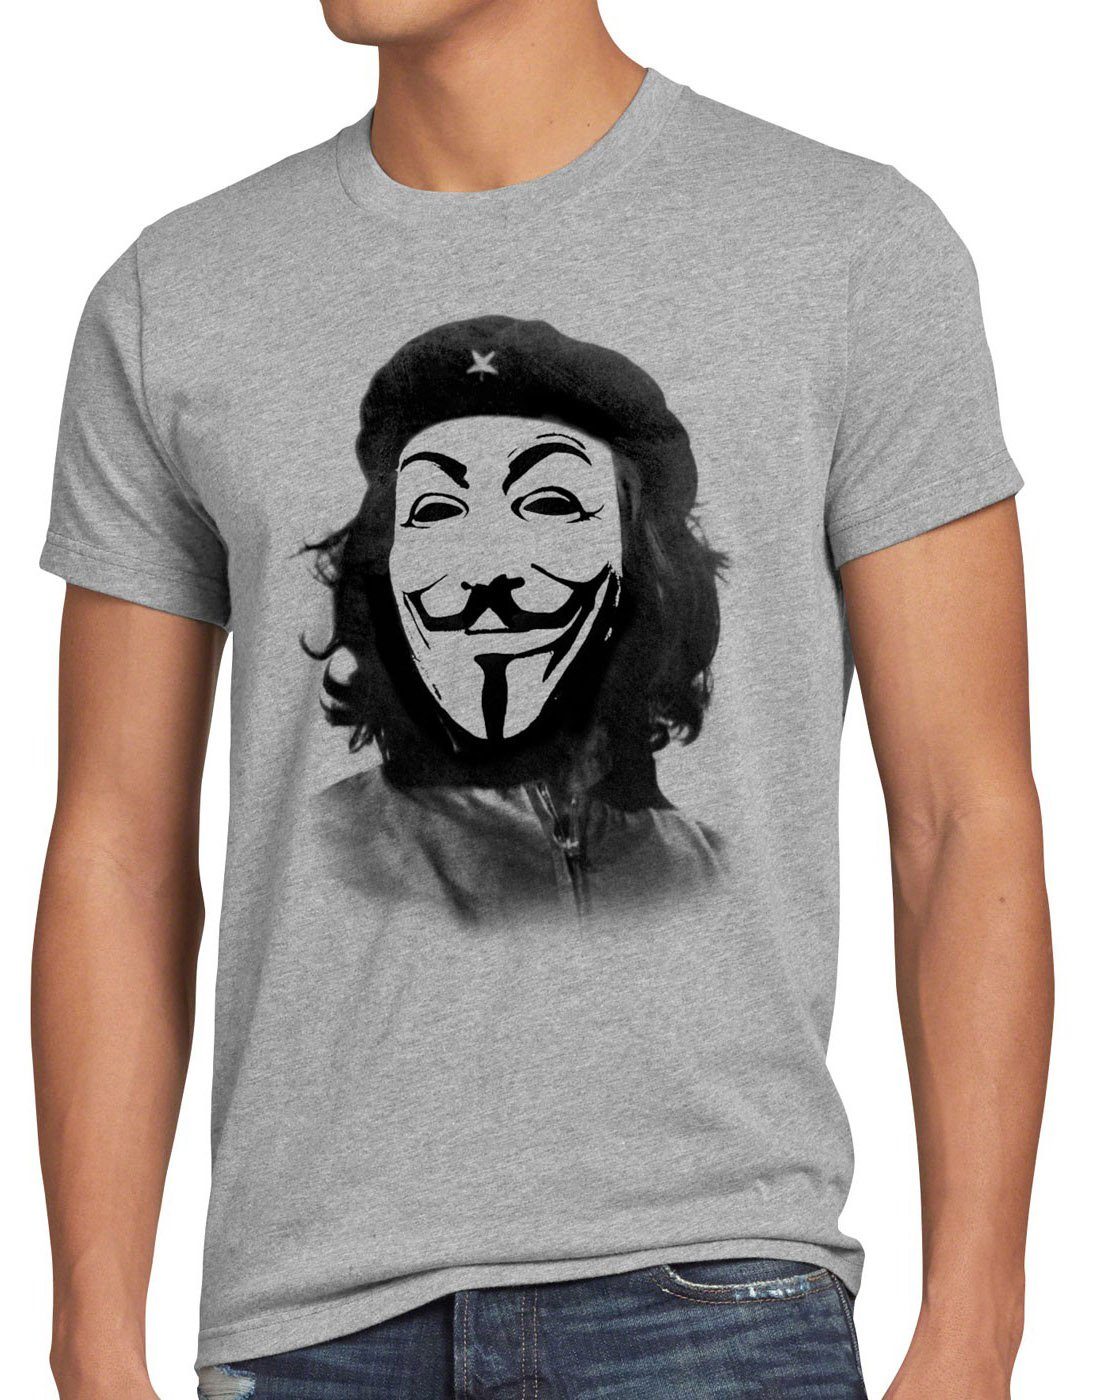 style3 Print-Shirt Herren T-Shirt Anonymous Che Guevara guy fawkes occupy maske guy fawkes hacker g8 kuba grau meliert